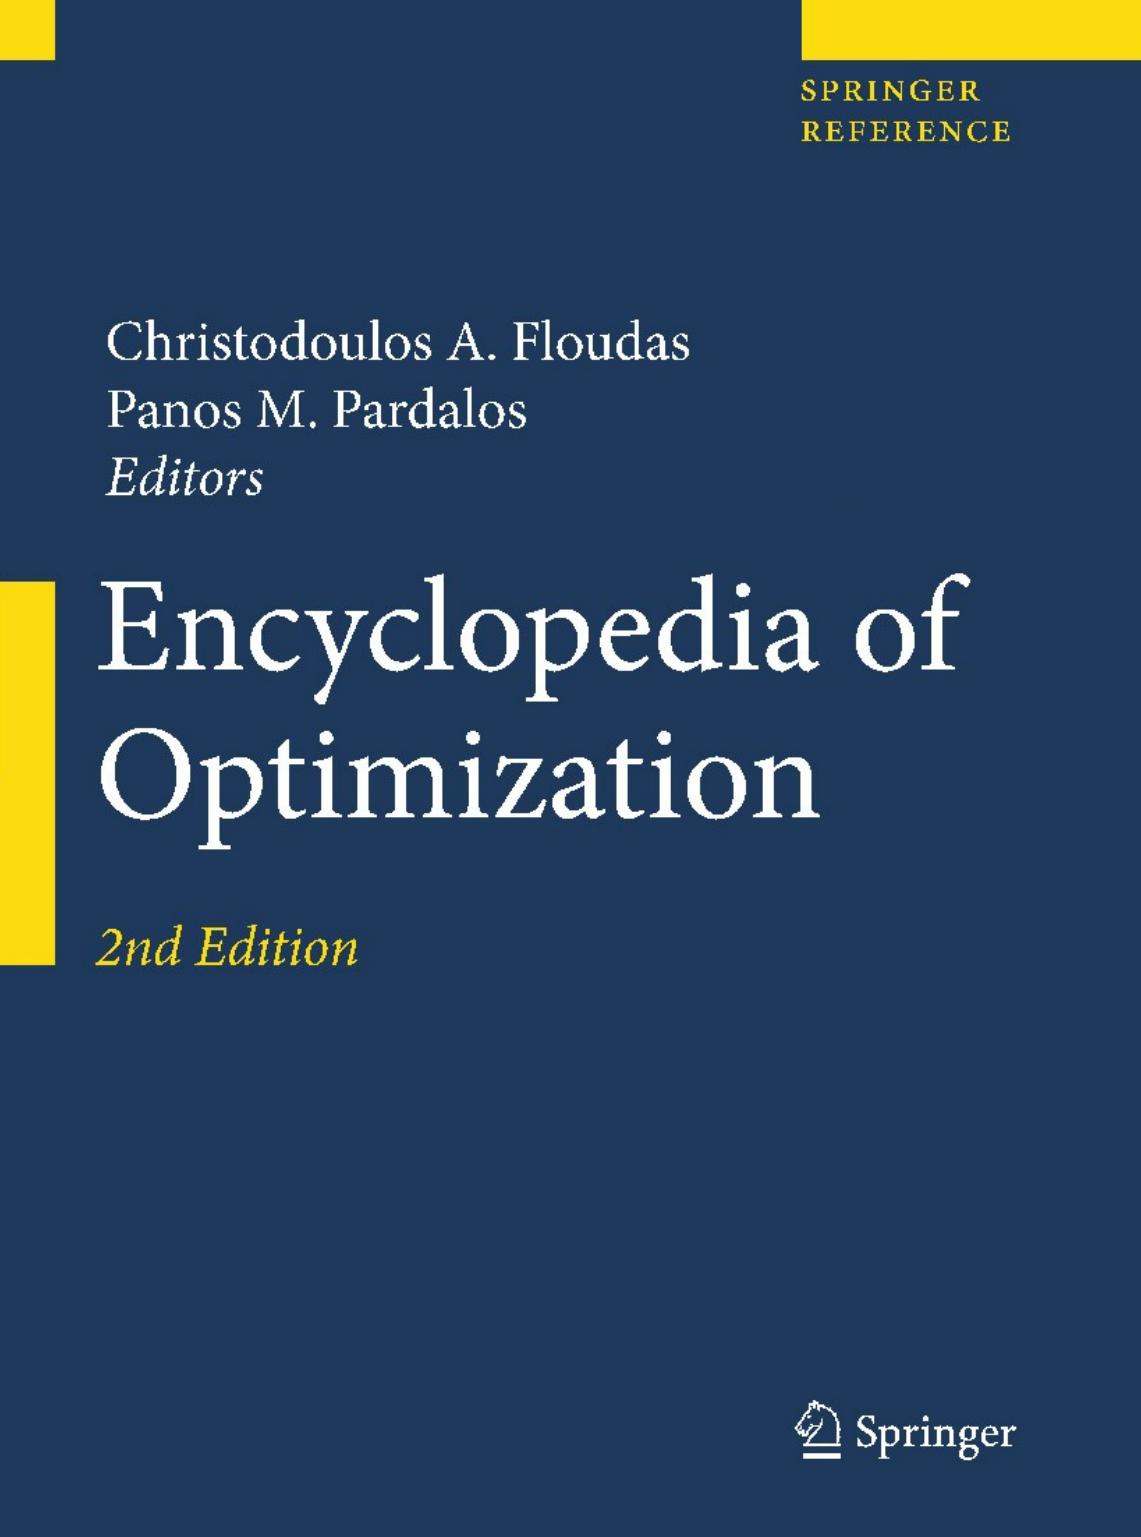 Encyclopedia of Optimization, Second Edition